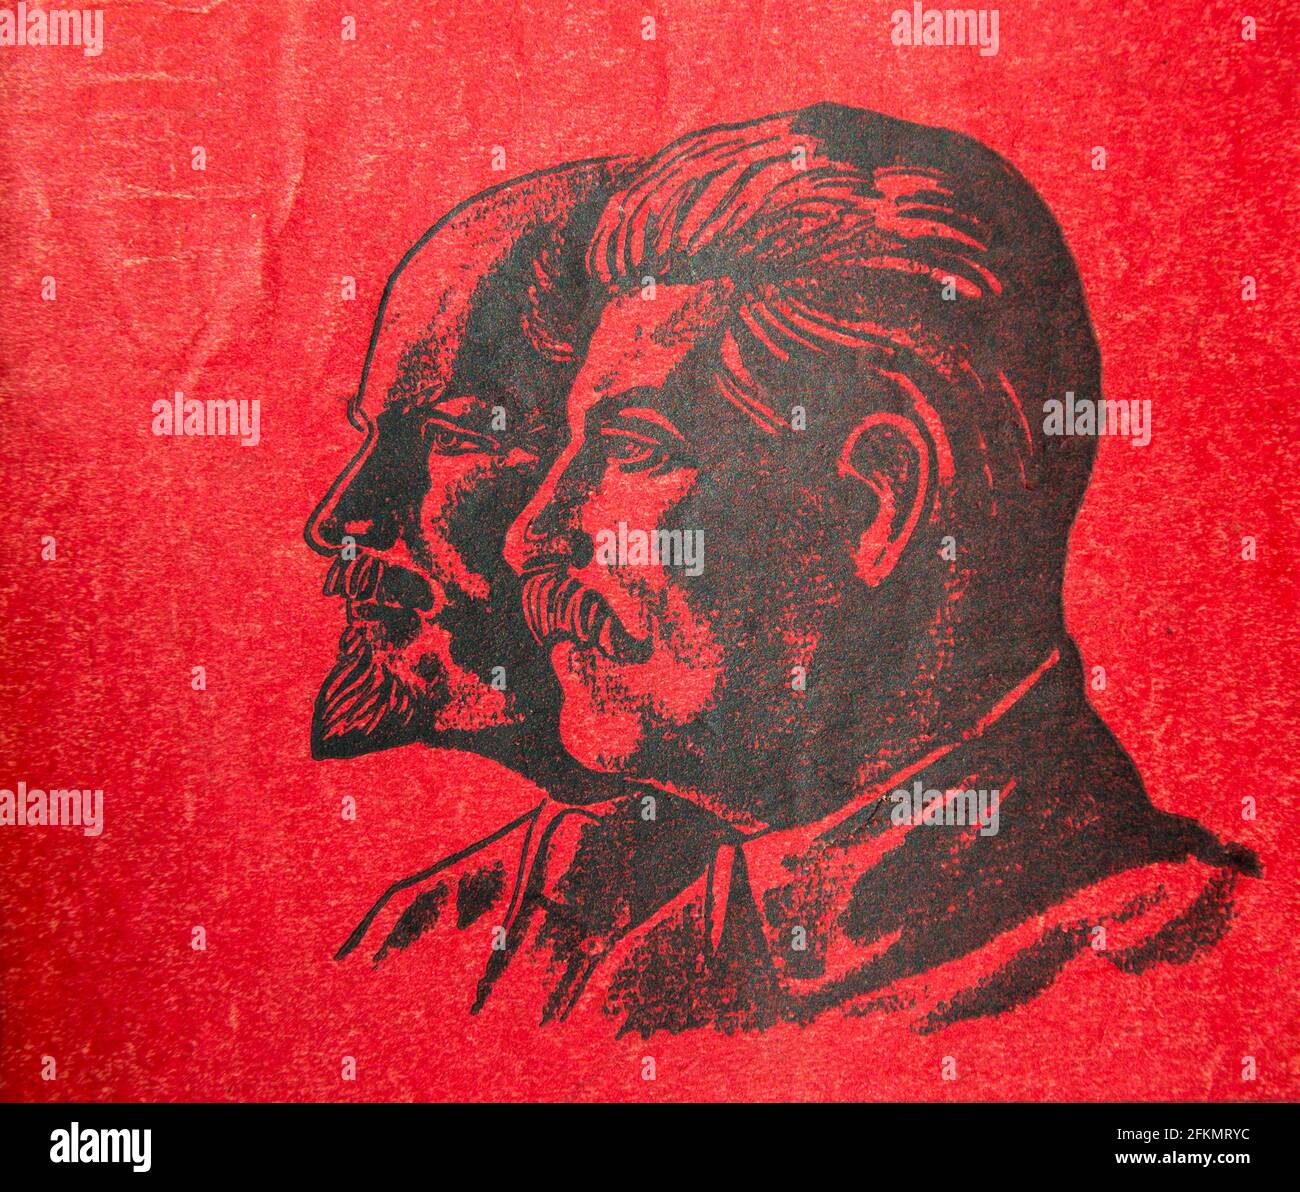 Plakat von Wladimir Lenin und Joseph Stalin. Stockfoto